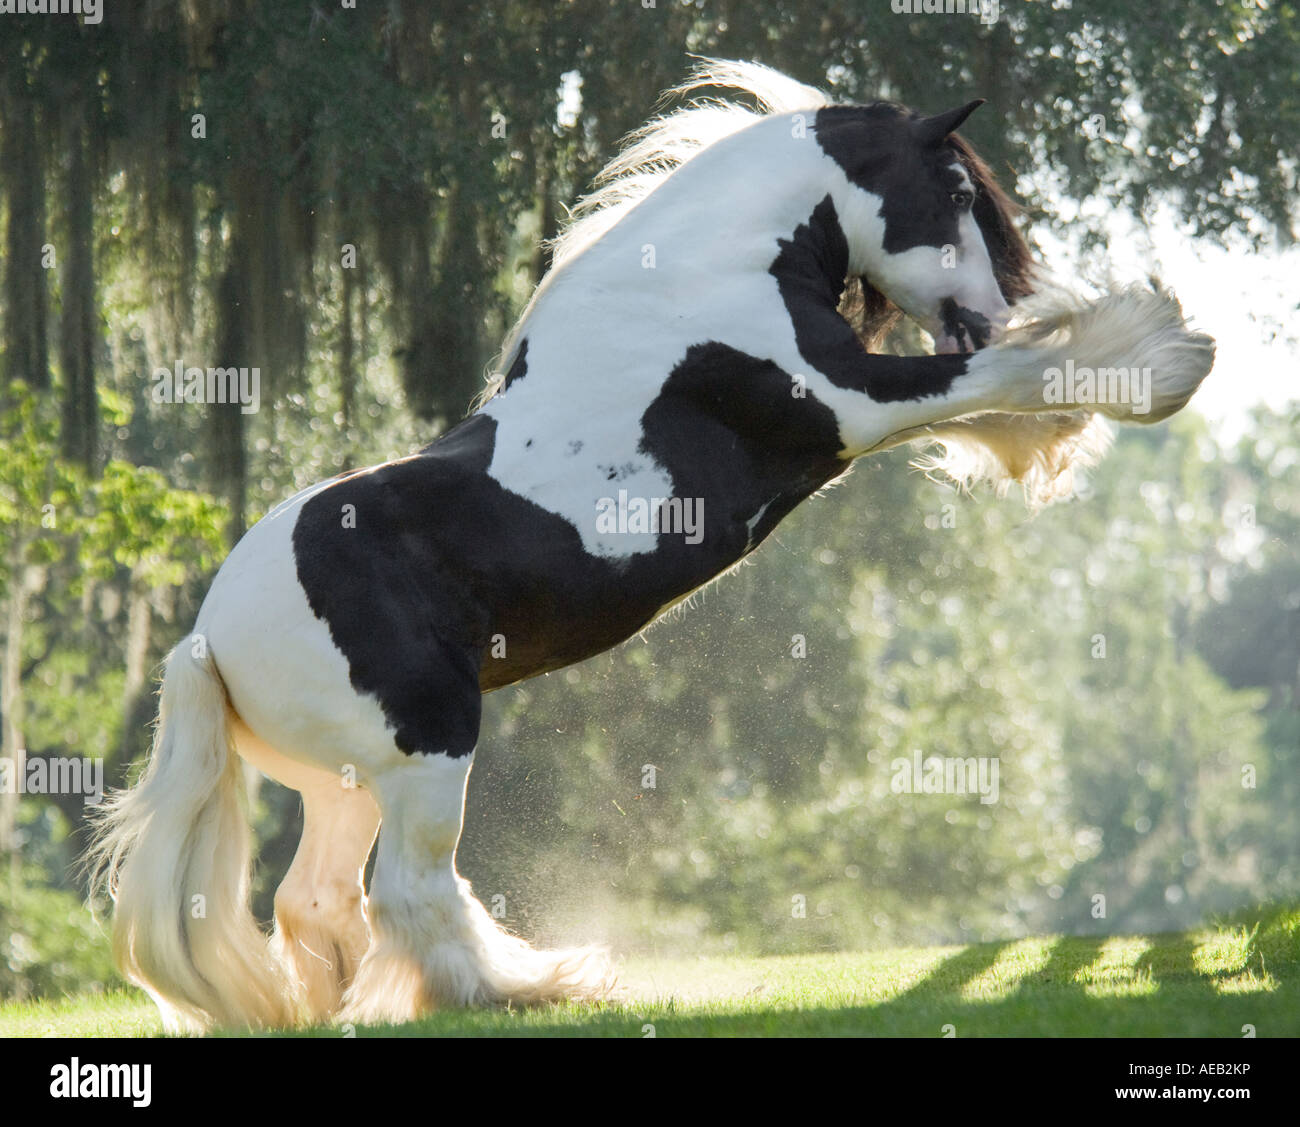 Rearing Gypsy Vanner Horse stallion Stock Photo